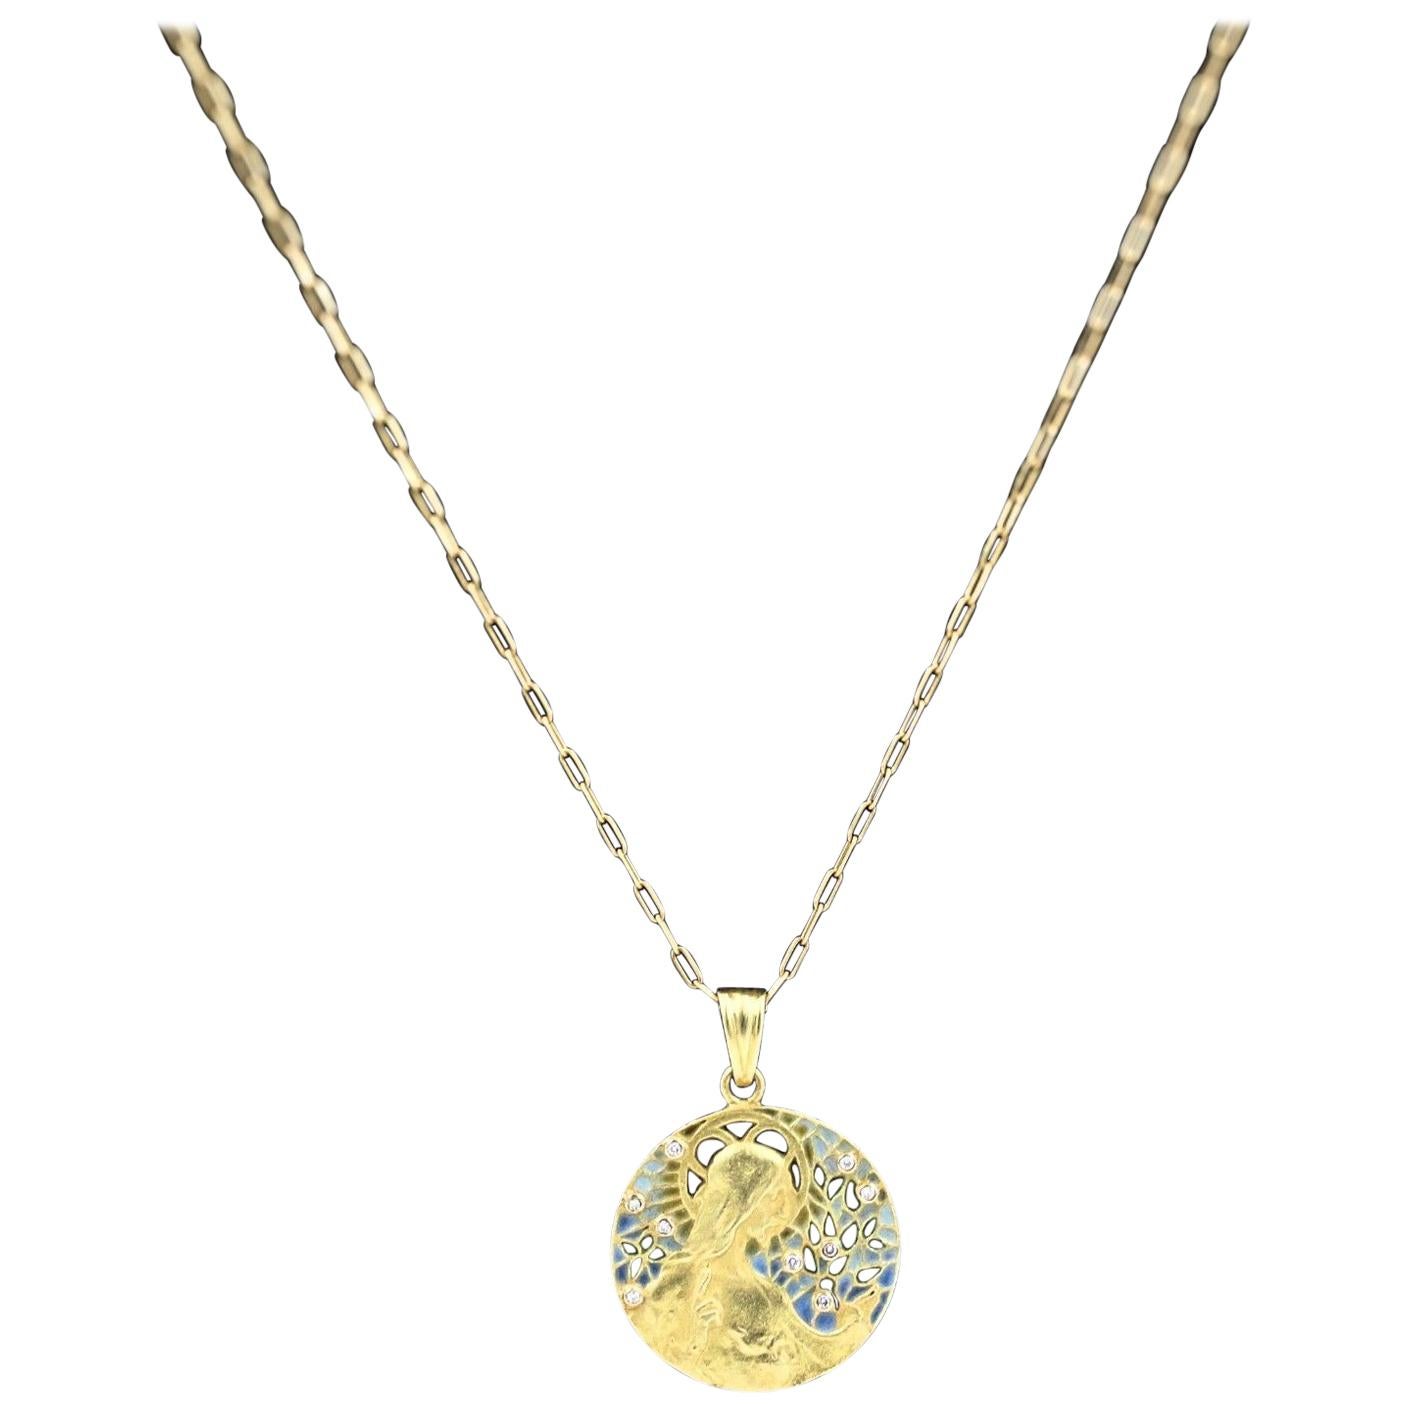 Masriera Jesus Madallion Pendant Necklace with Diamonds in 18 Karat Yellow Gold